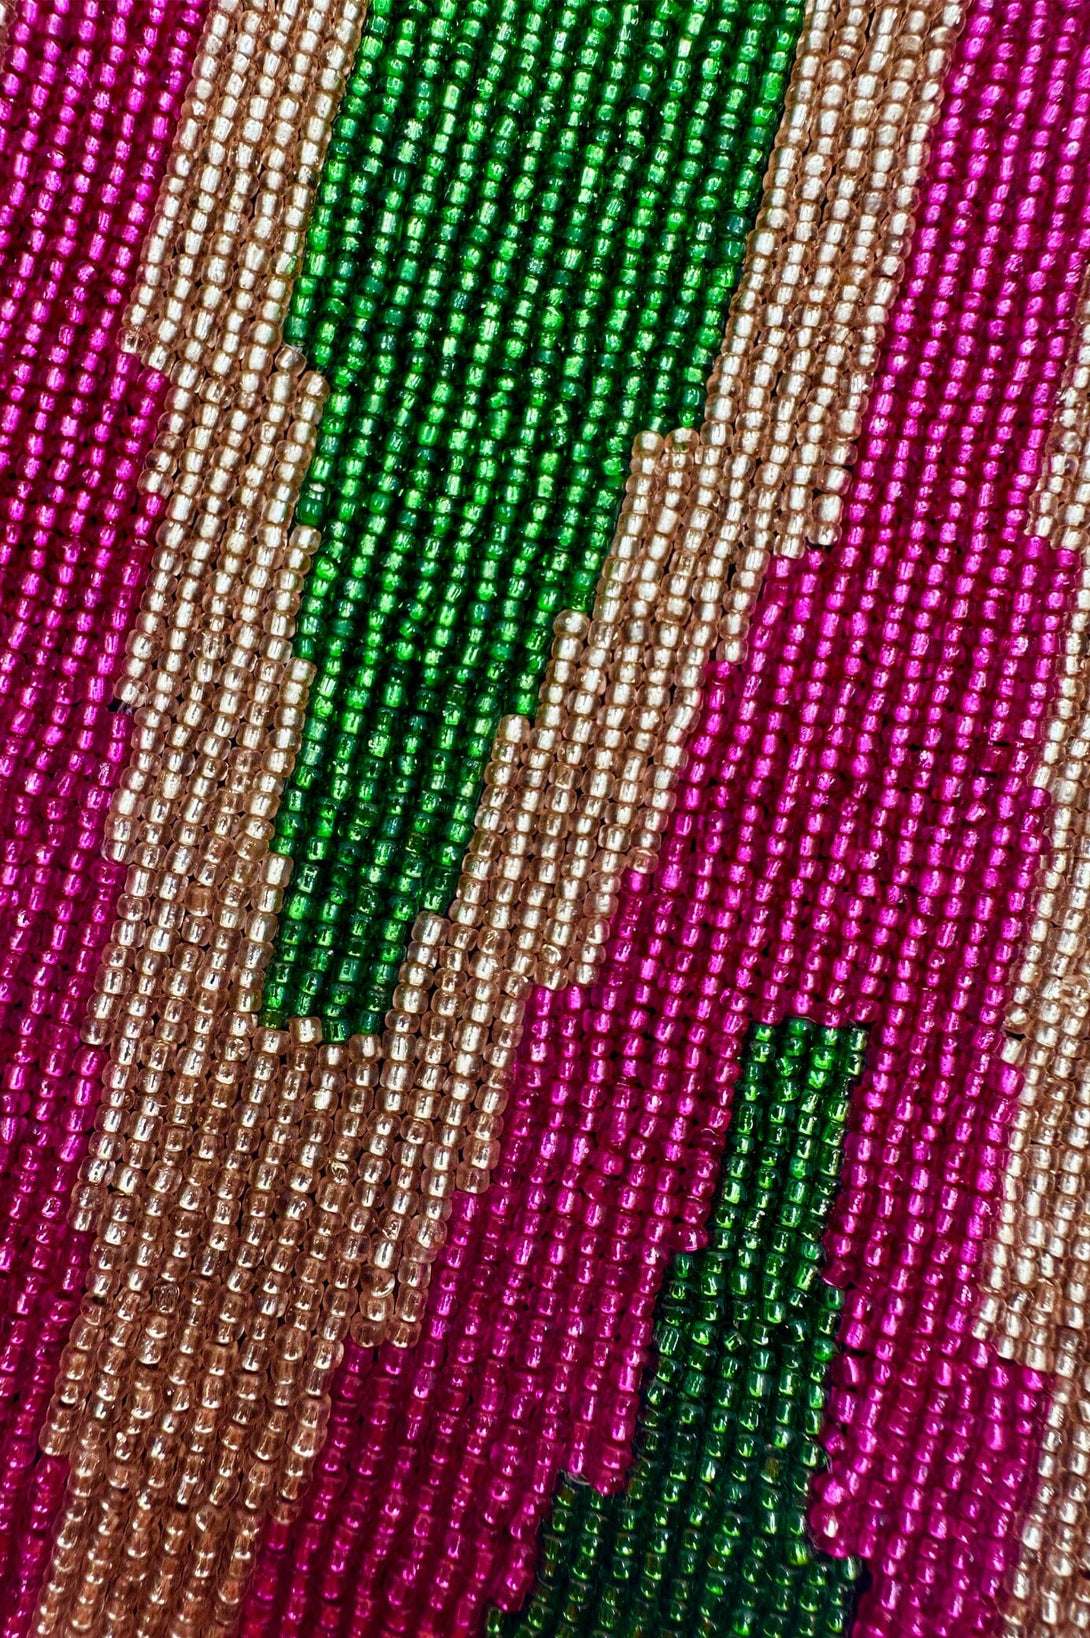 Namira Sequinned Clutch Bag Green/Pink Clutch